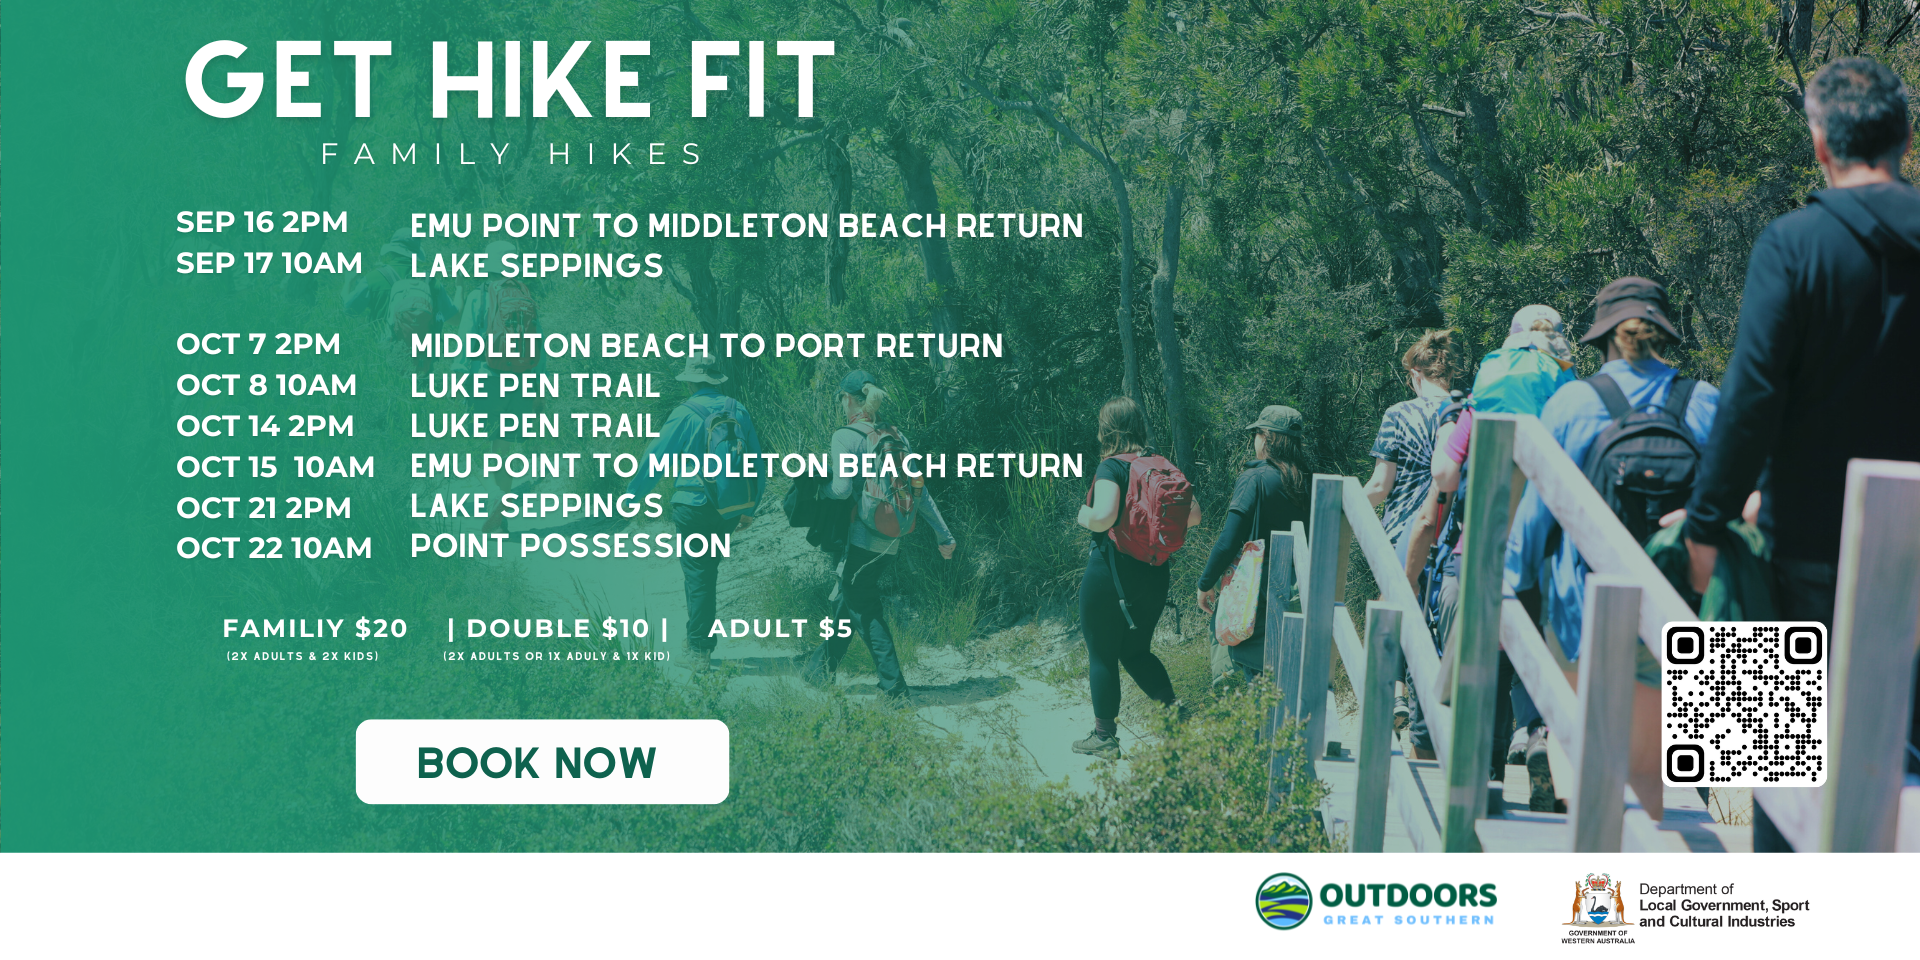 Get Hike Fit